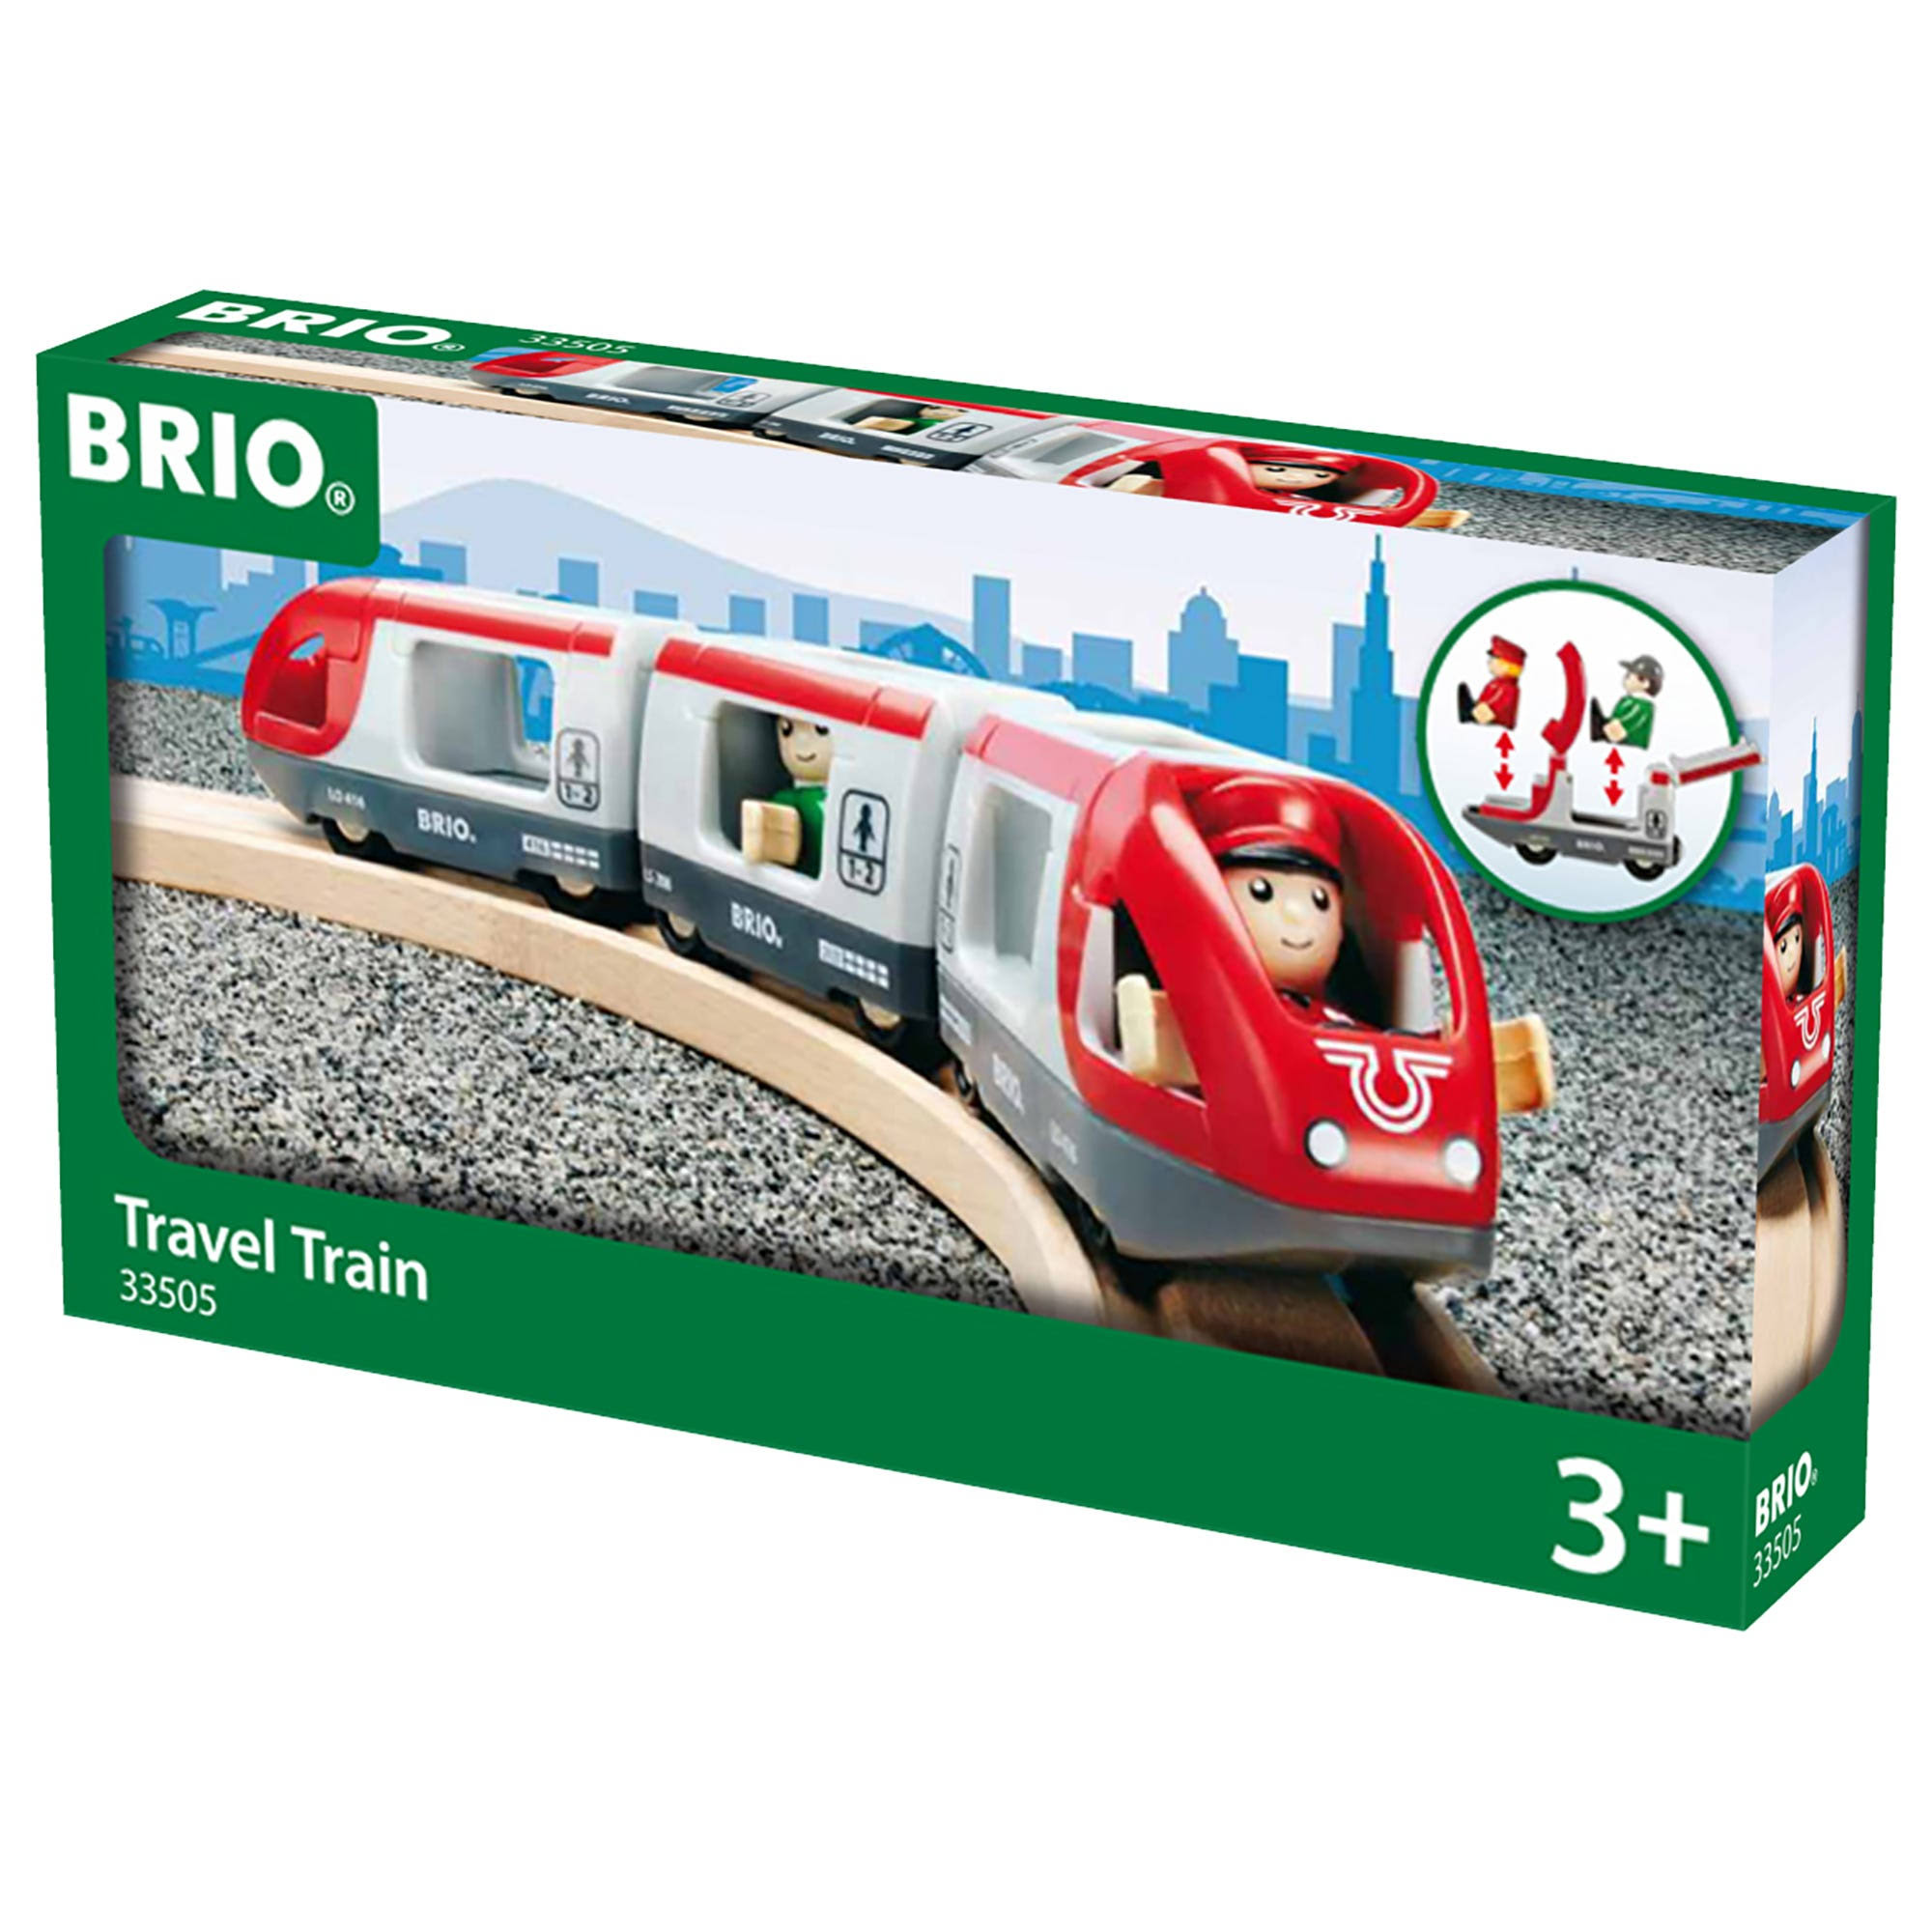 Brio Travel Train for Wooden Railway Sets